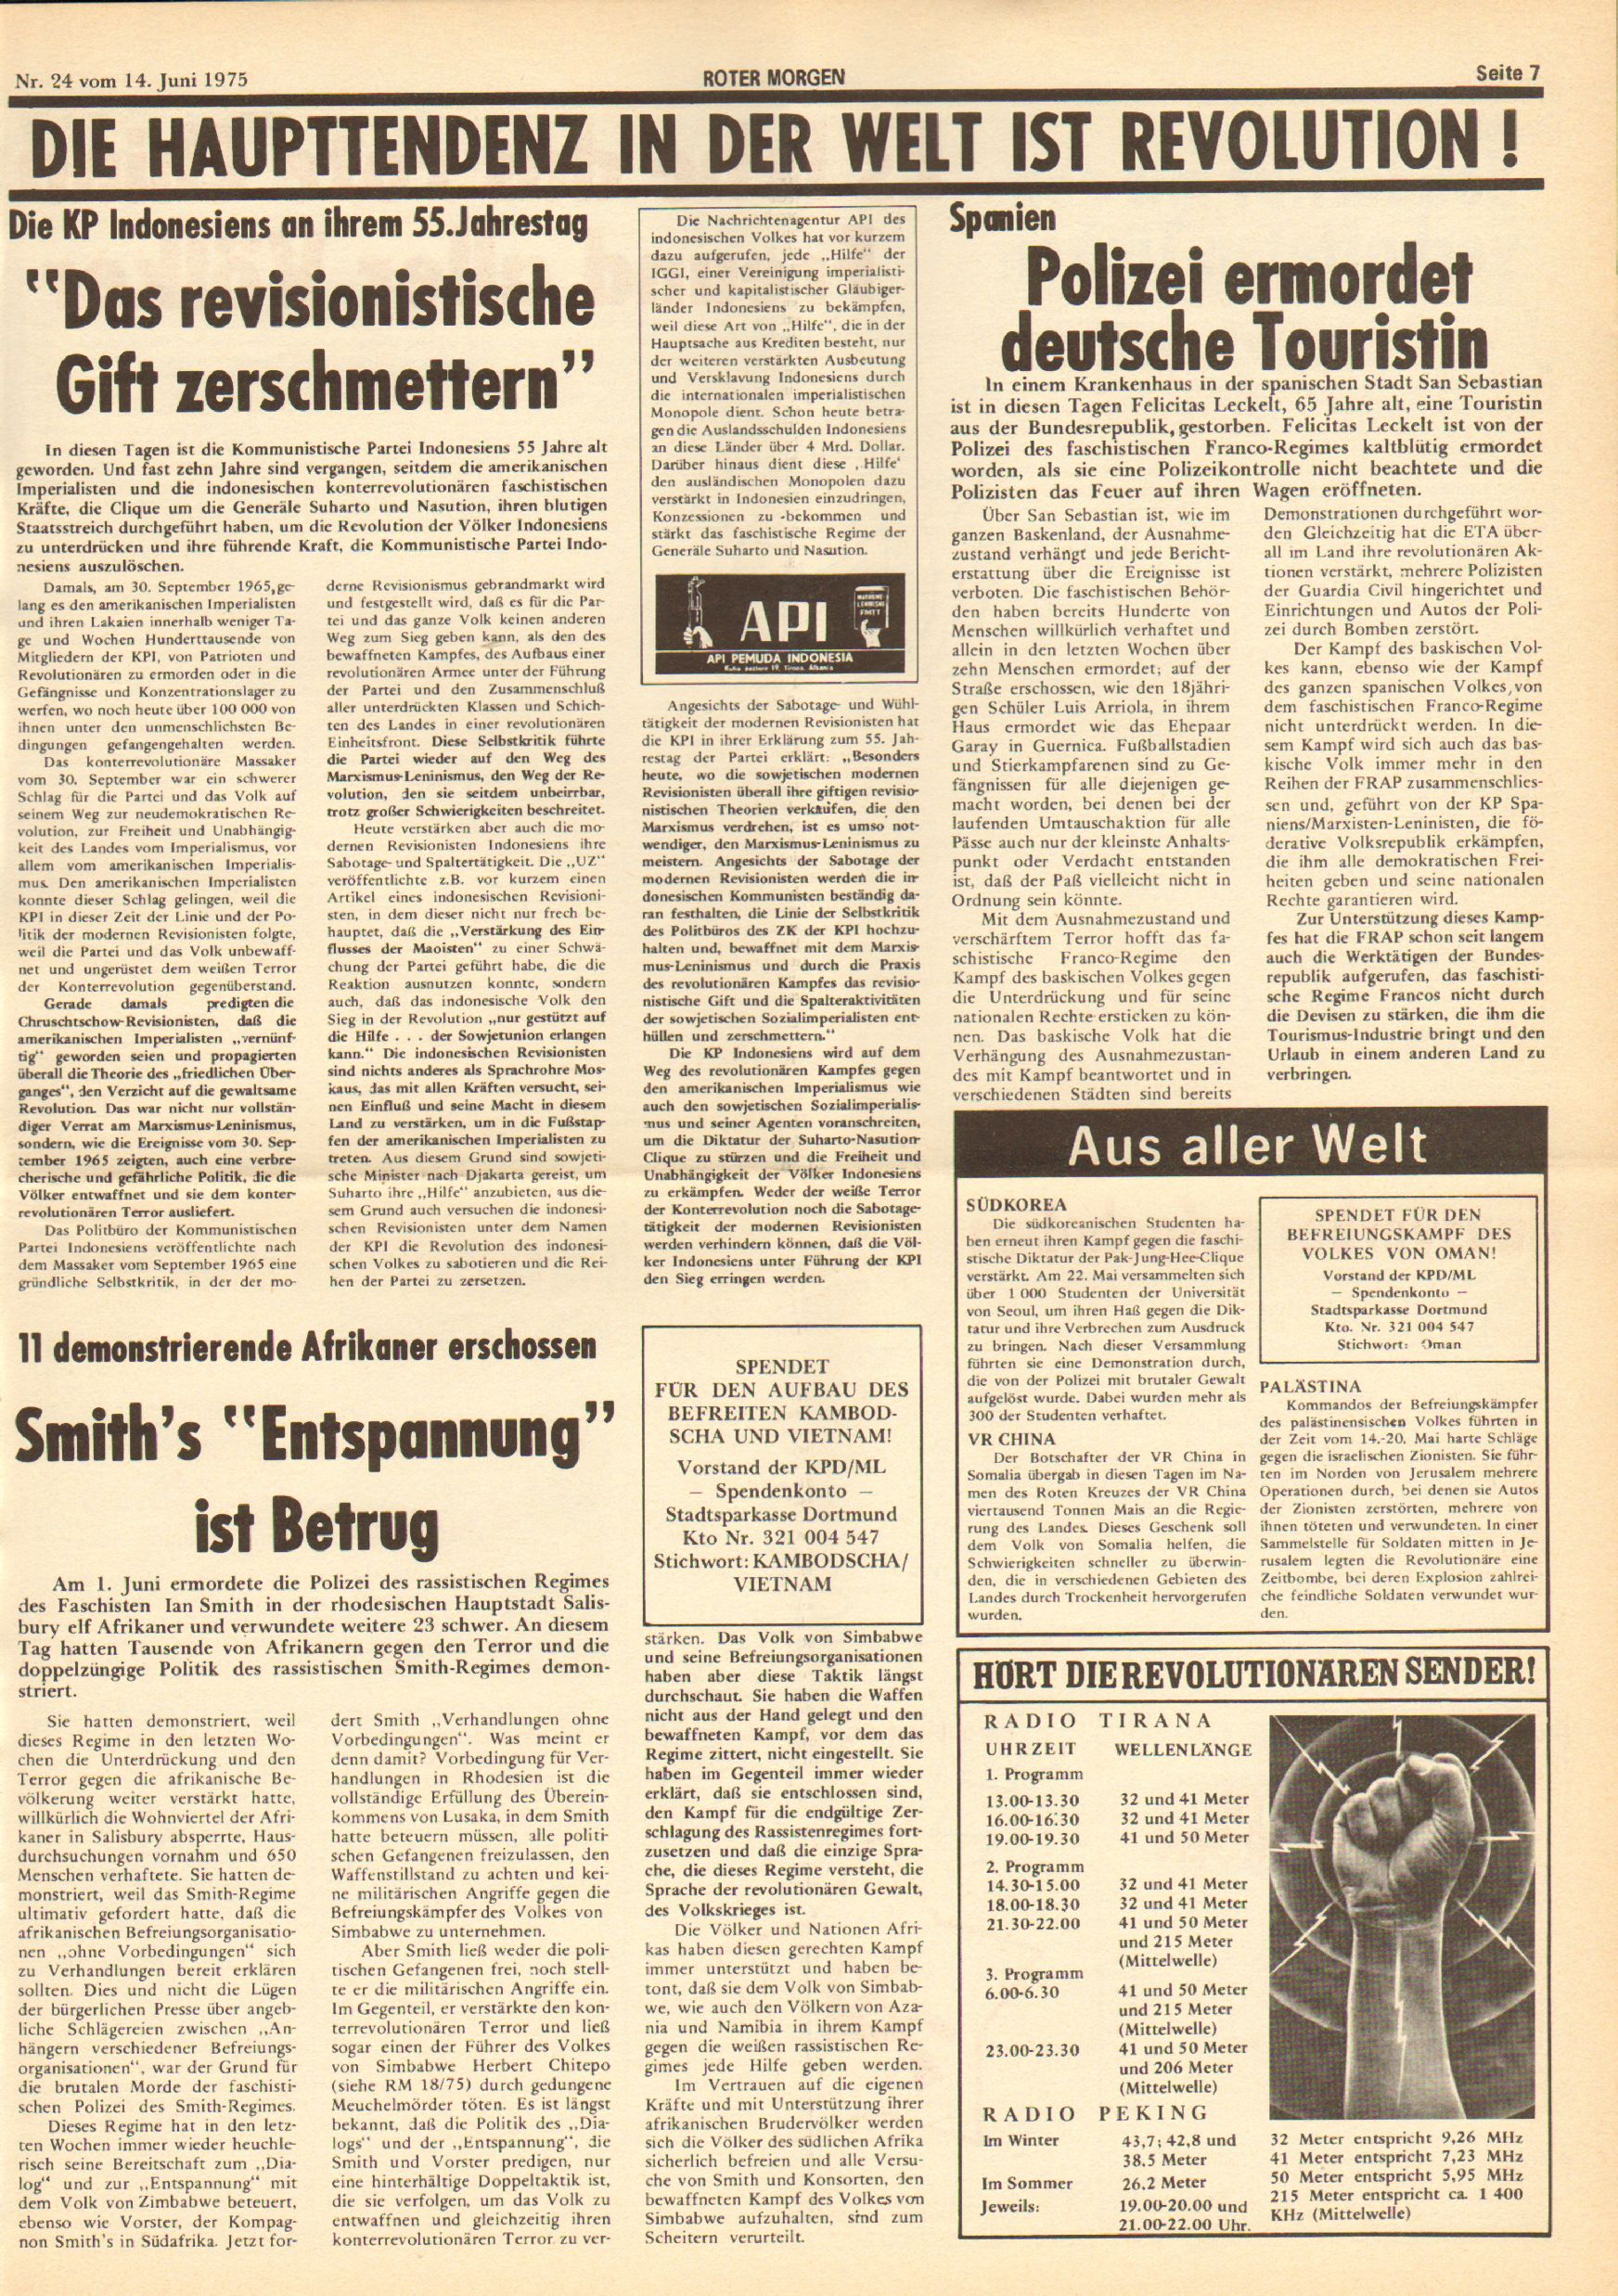 Roter Morgen, 9. Jg., 14. Juni 1975, Nr. 24, Seite 7